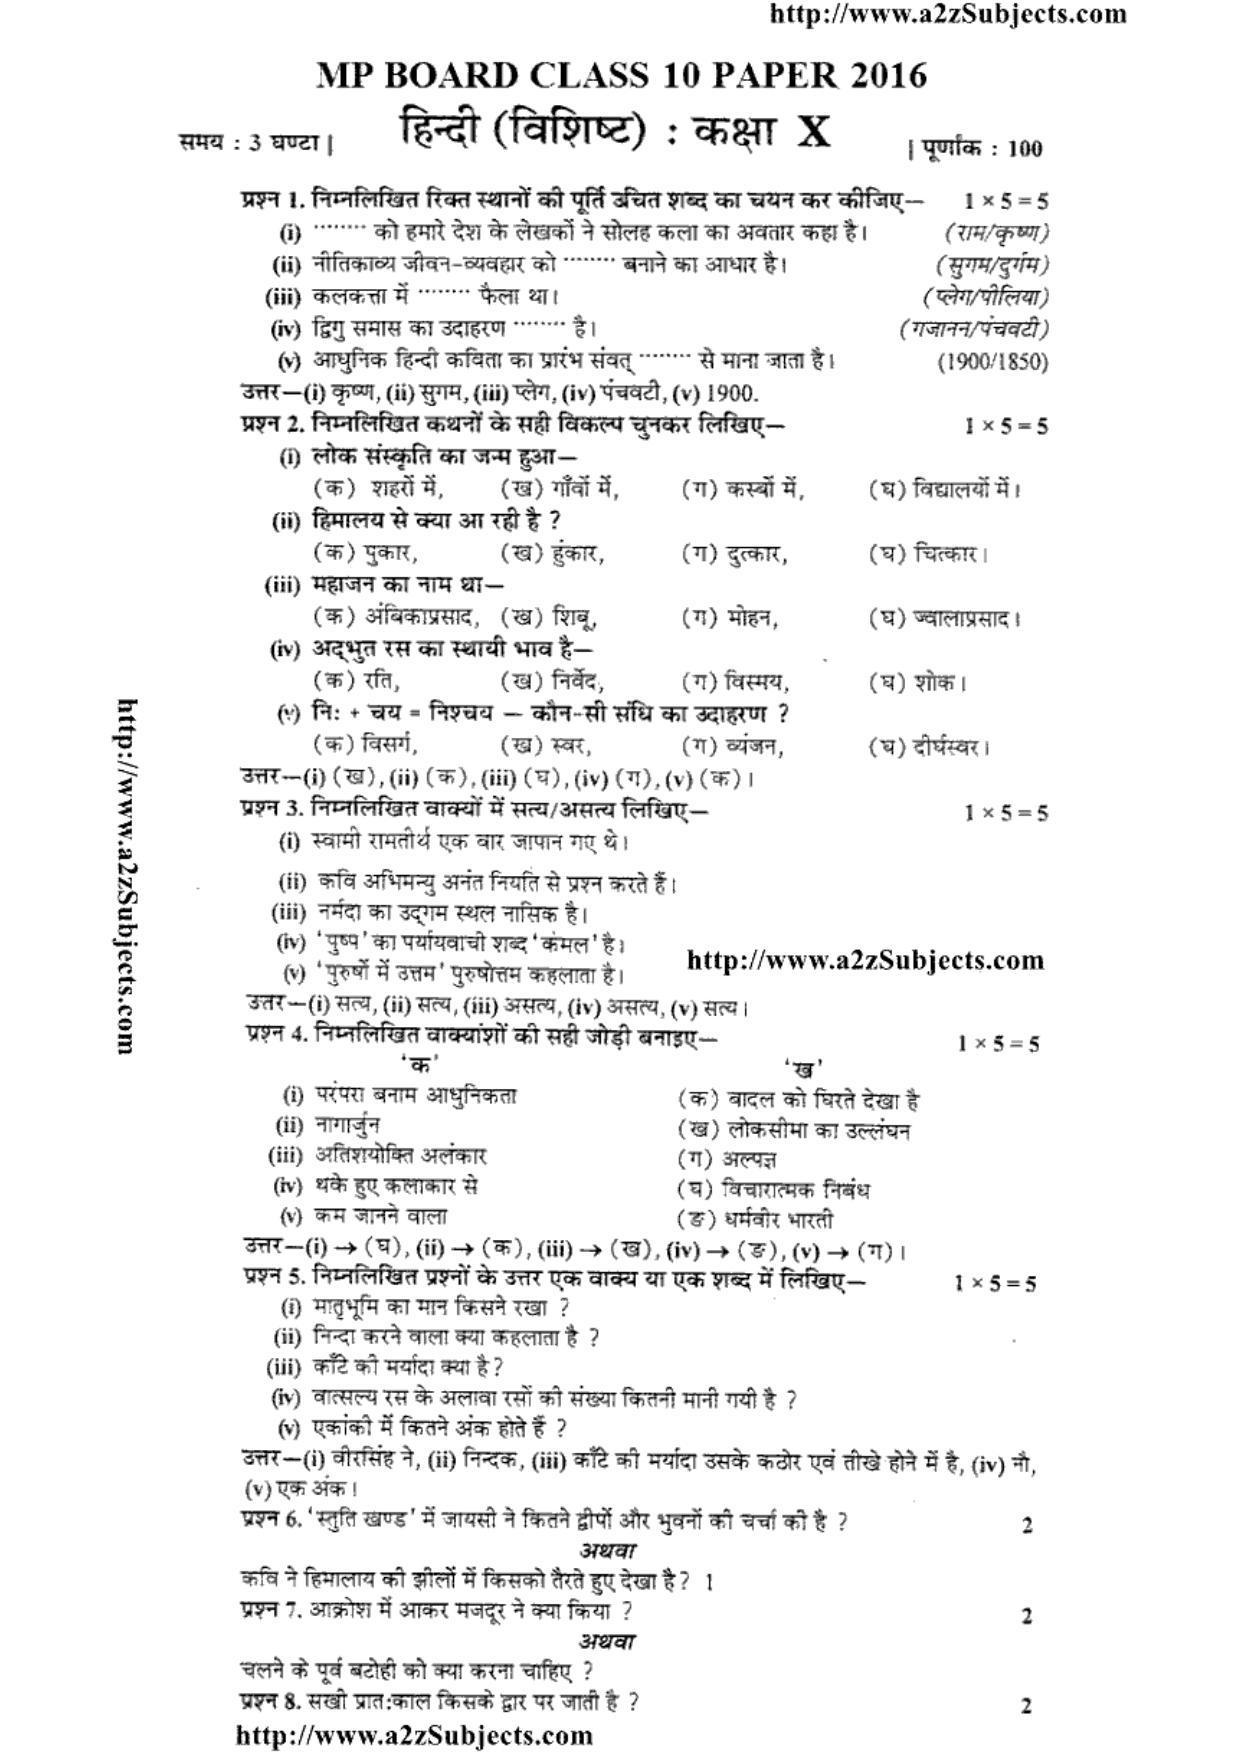 MP Board Class 10 Hindi (Hindi Medium) 2016 Question Paper - Page 1